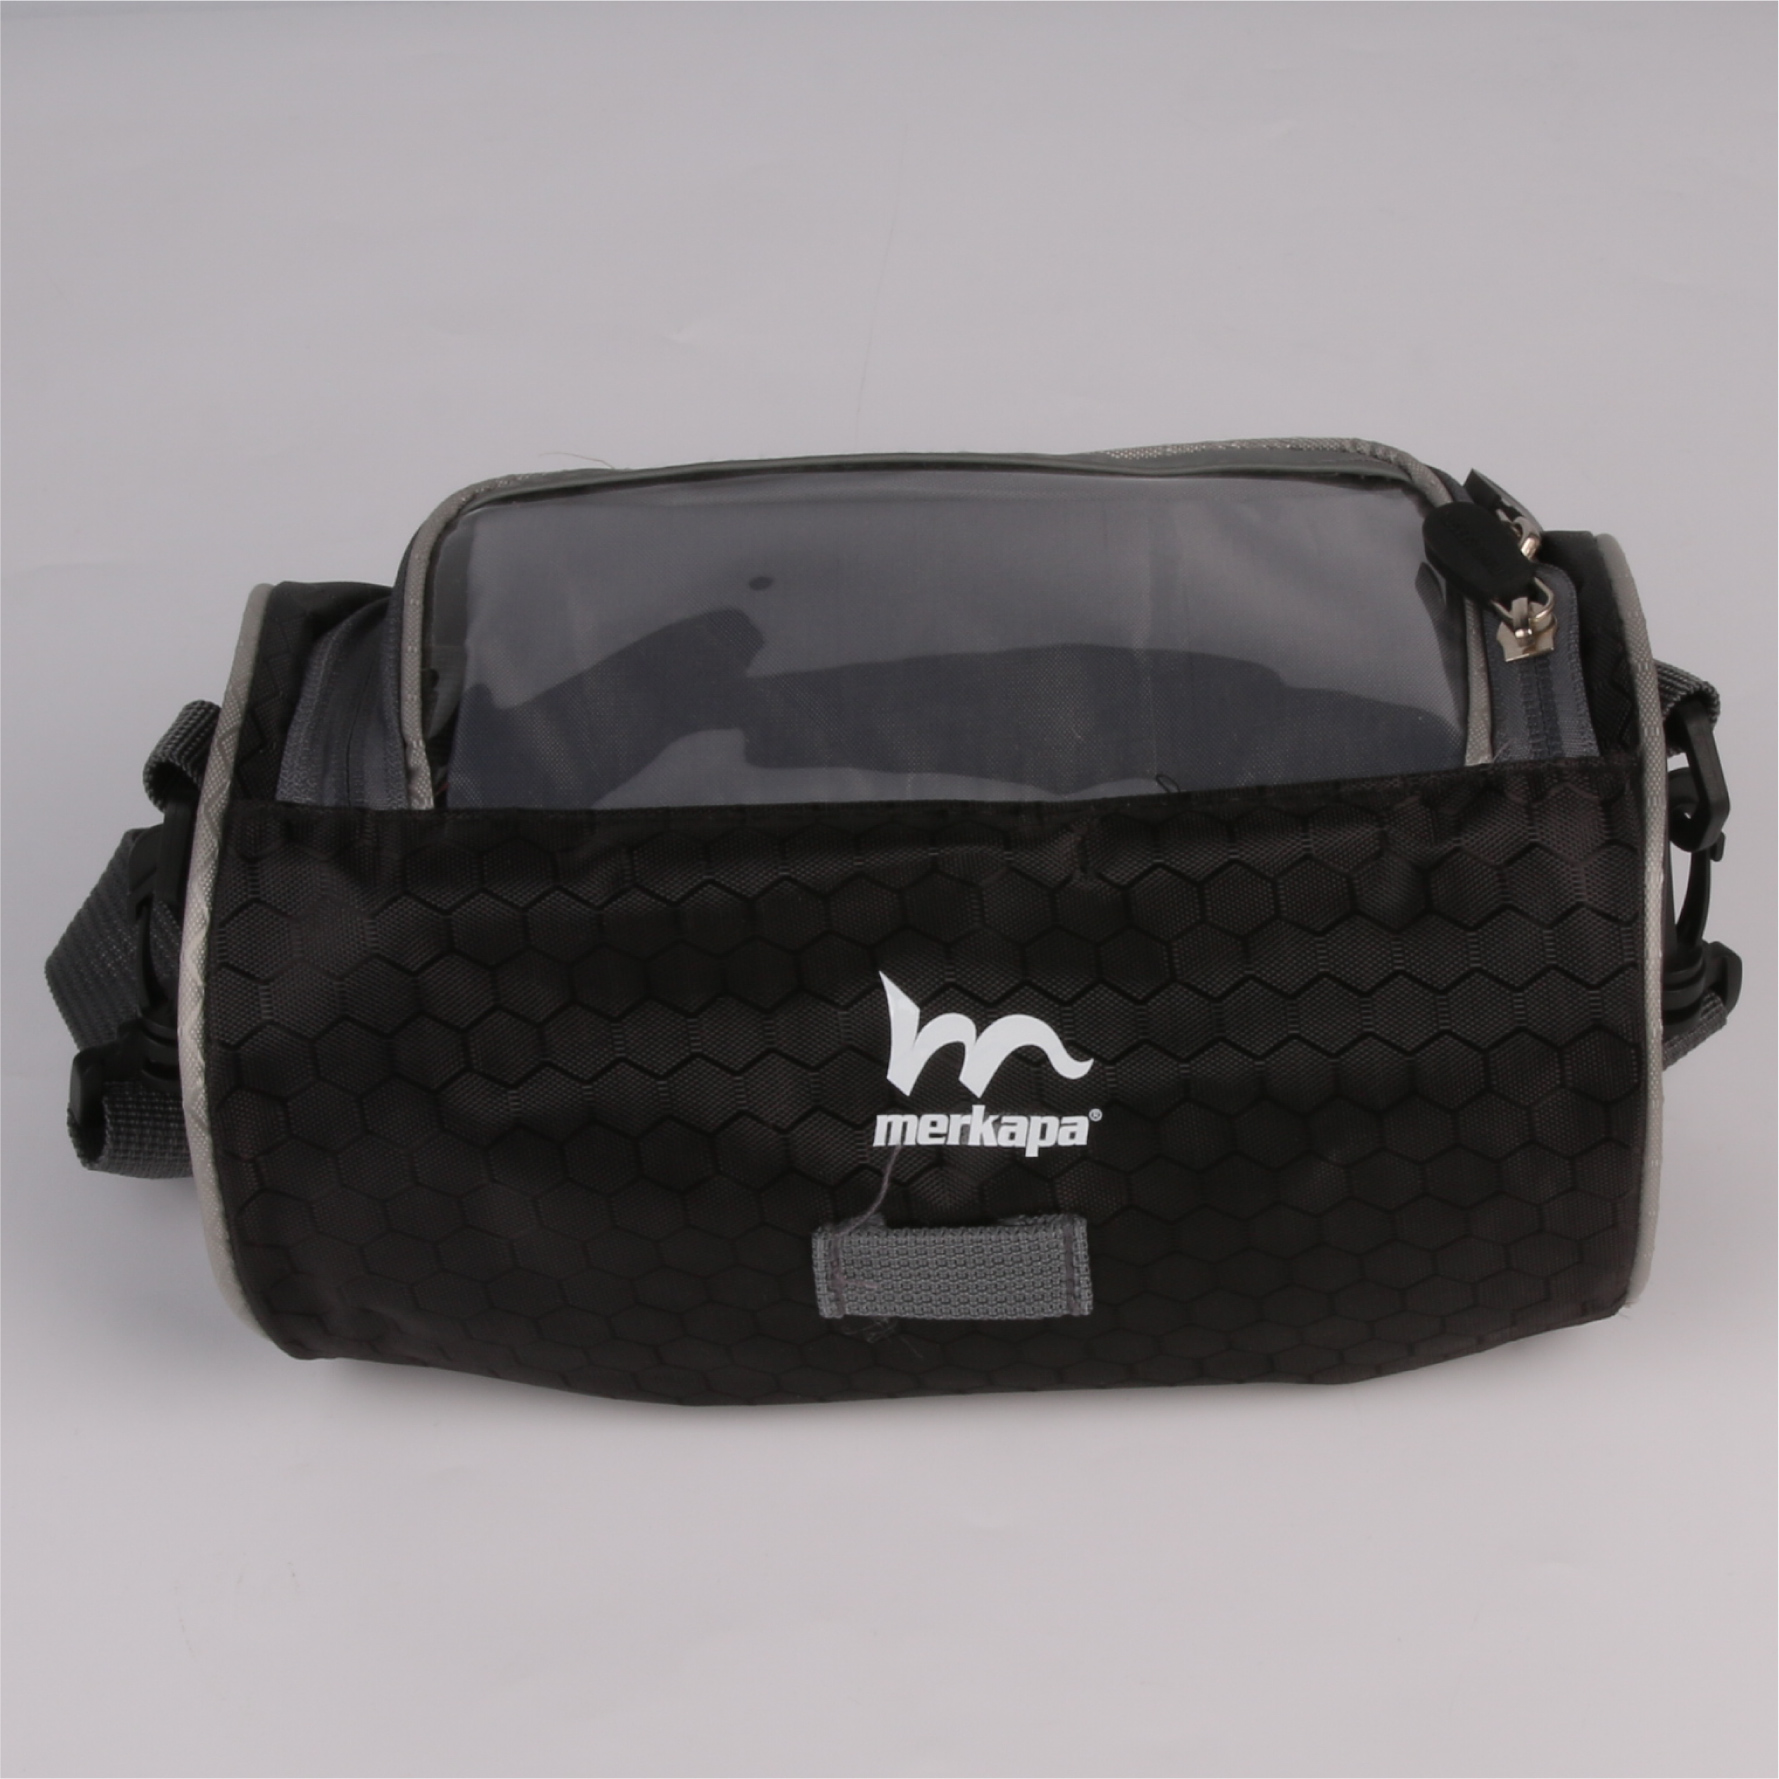 M Merkapa Bags specially adapted for sports equipment for Sport Bike